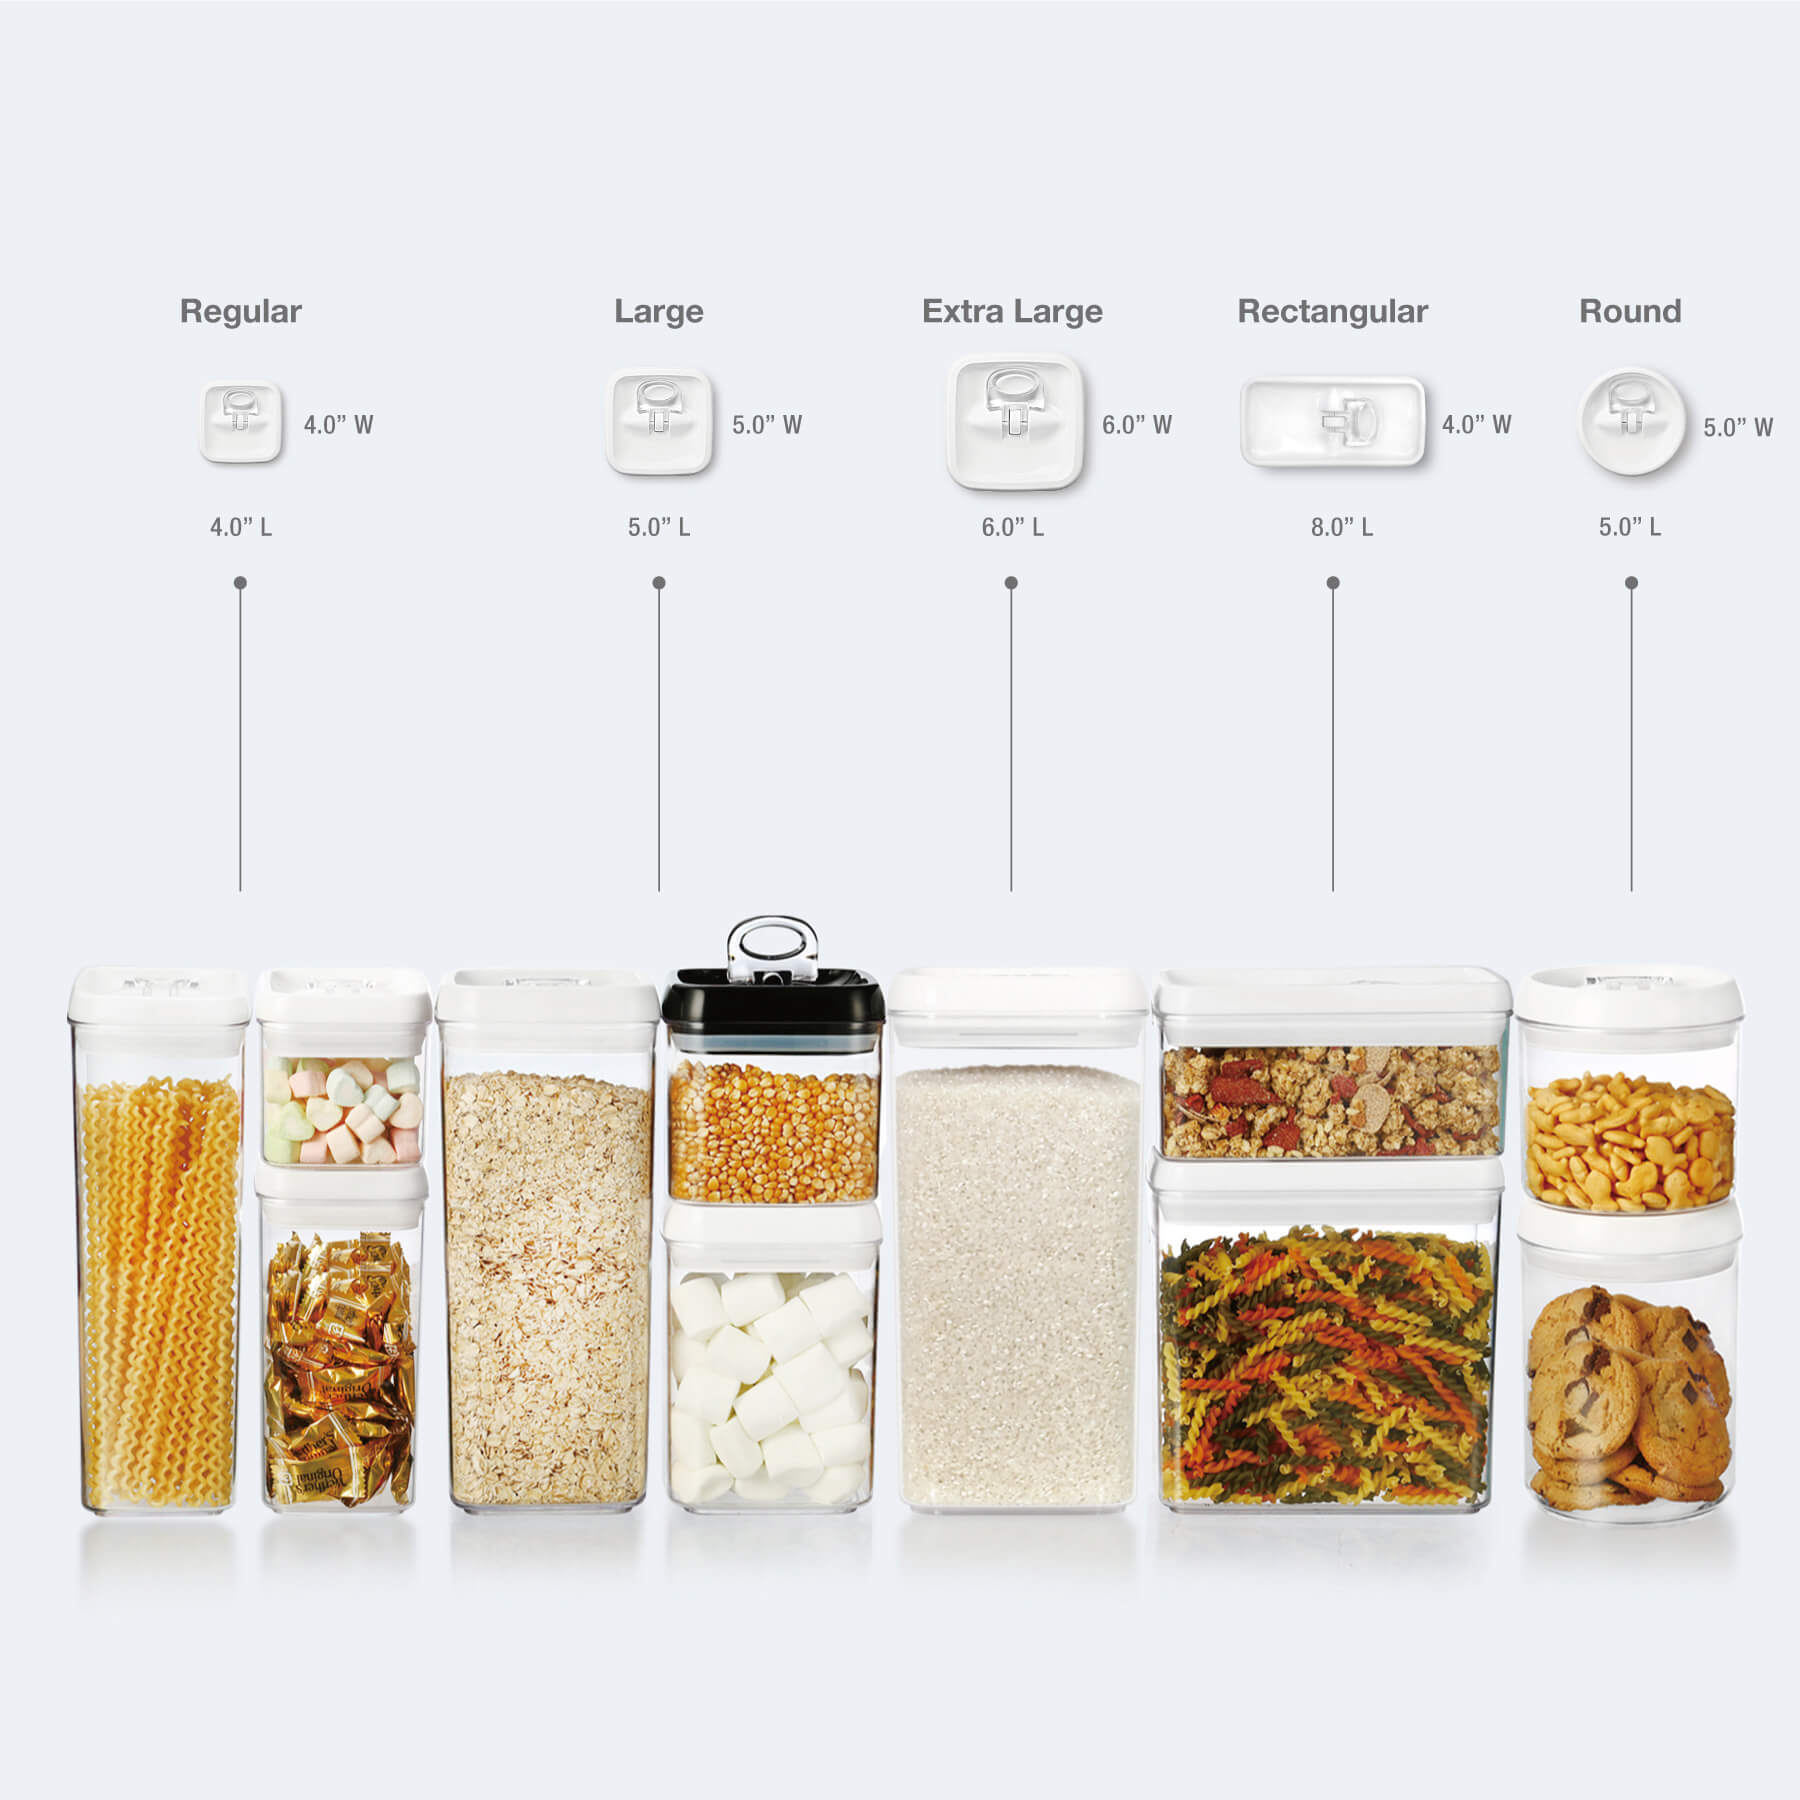 OXO Good Grips 2.8 Qt. Clear Square SAN Plastic Food Storage